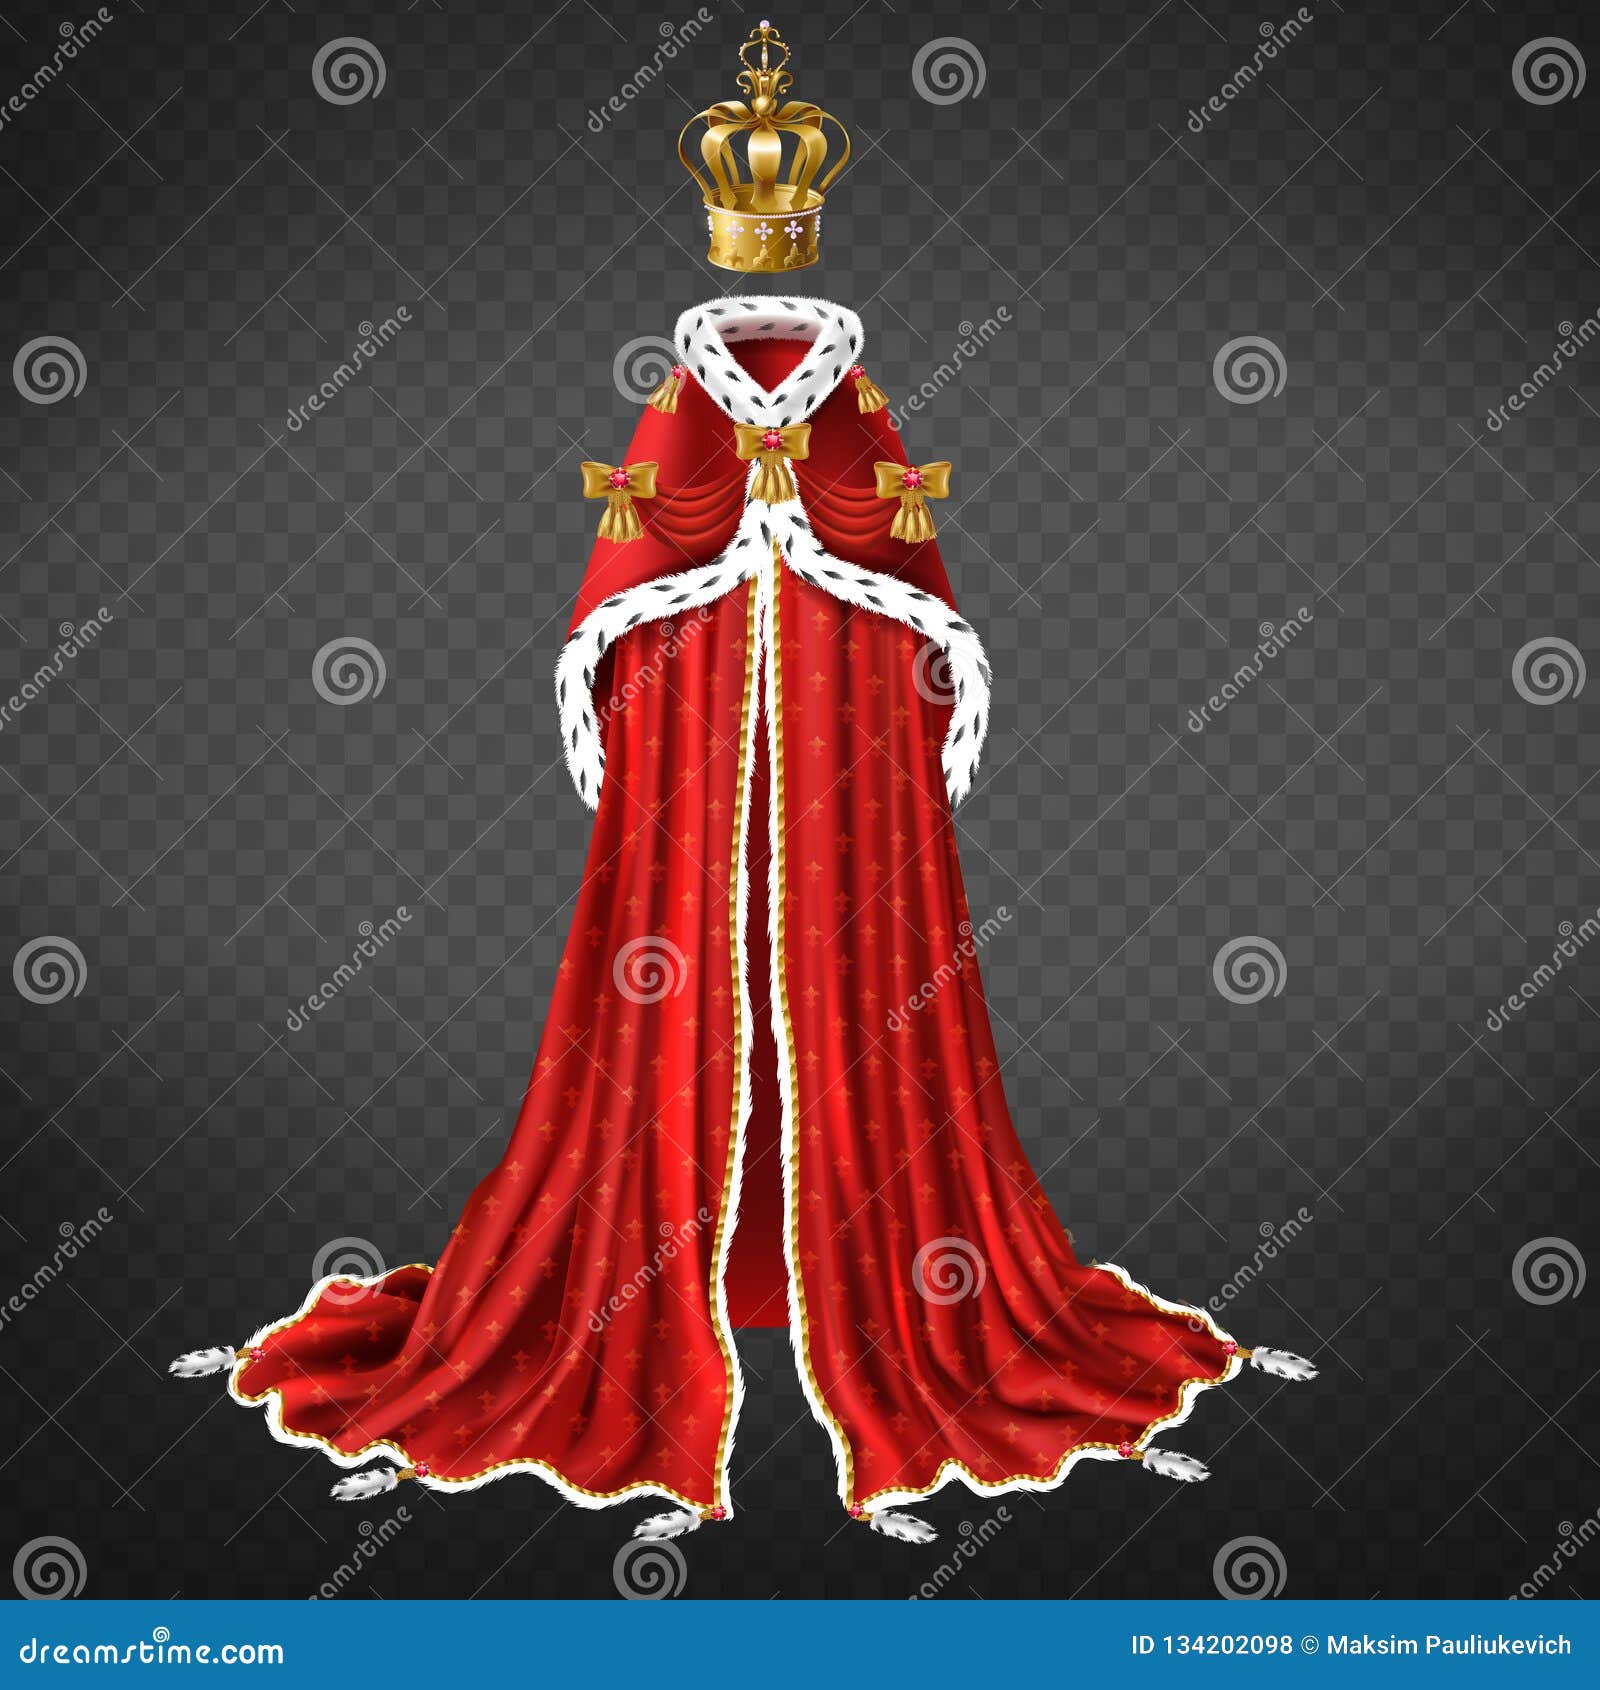 Magical Princess Cape Gold Crown